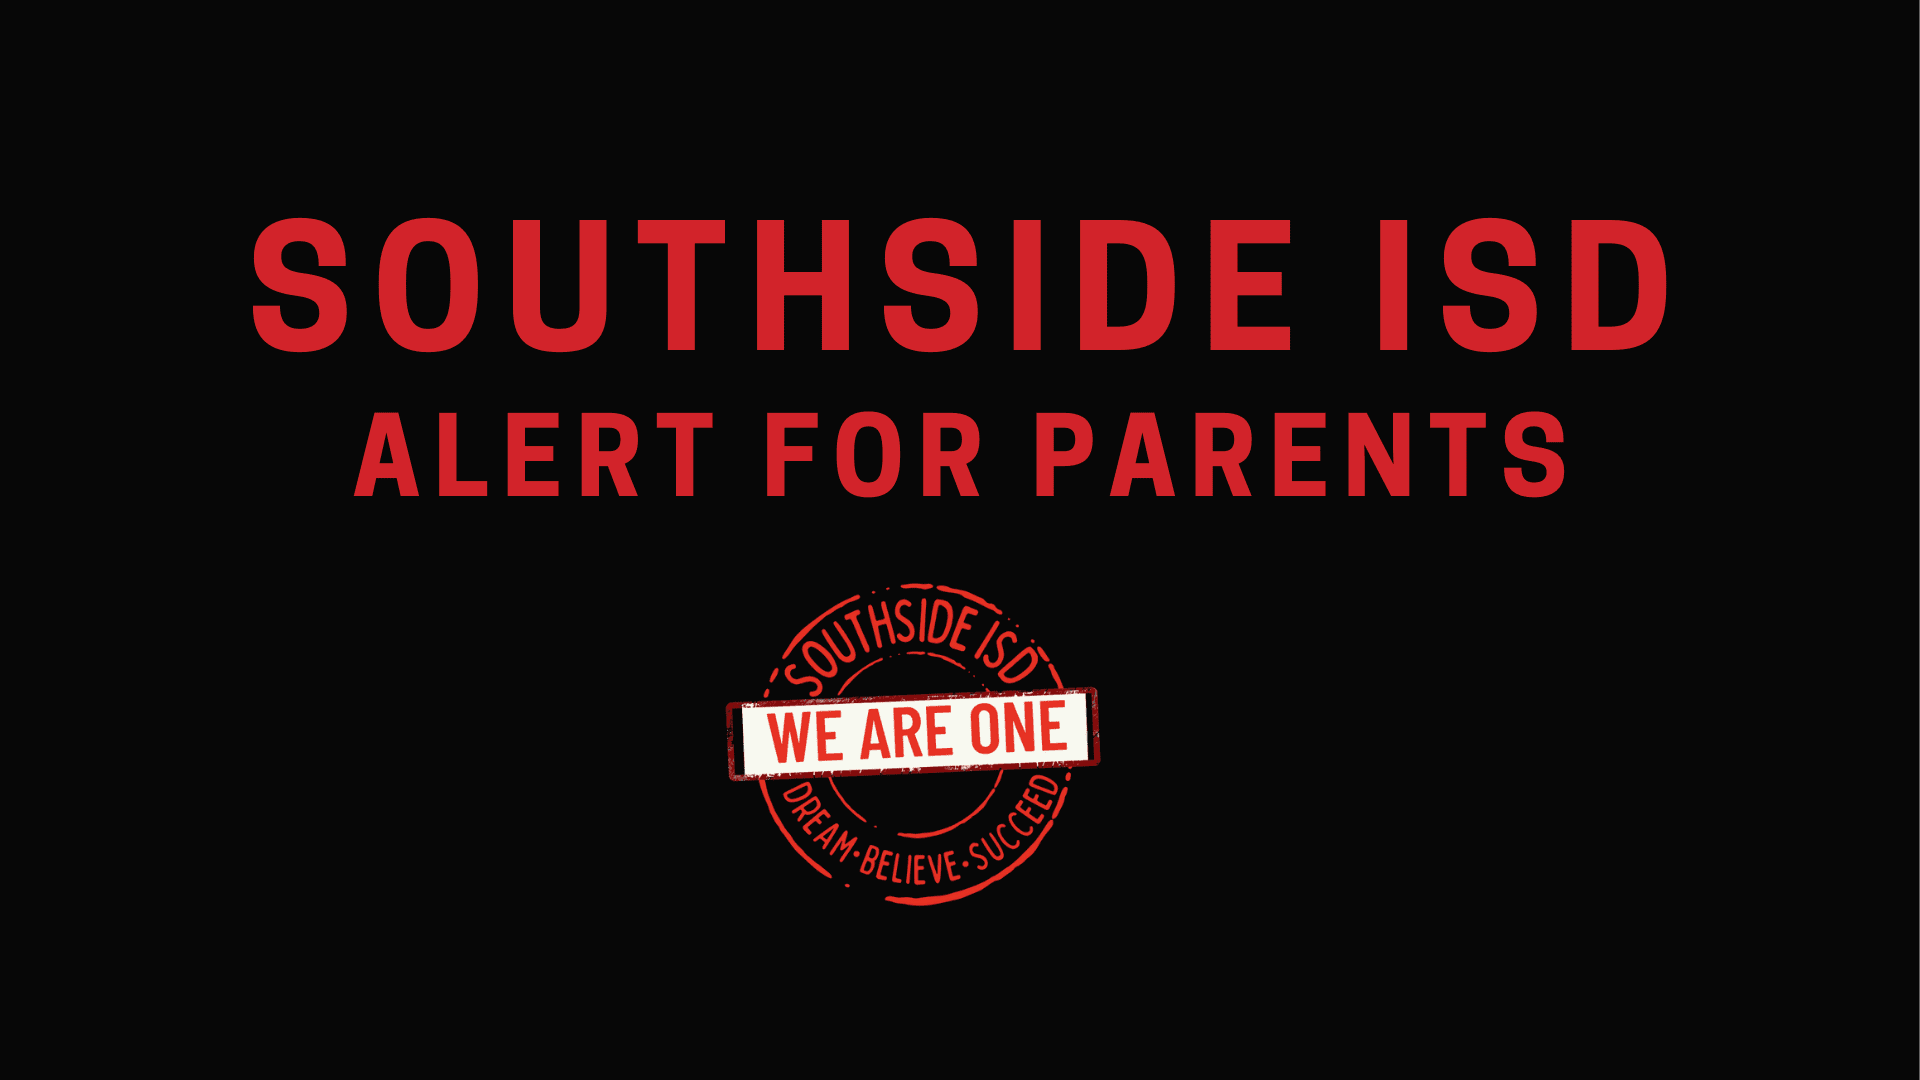 Southside ISD Alert for Parentrs